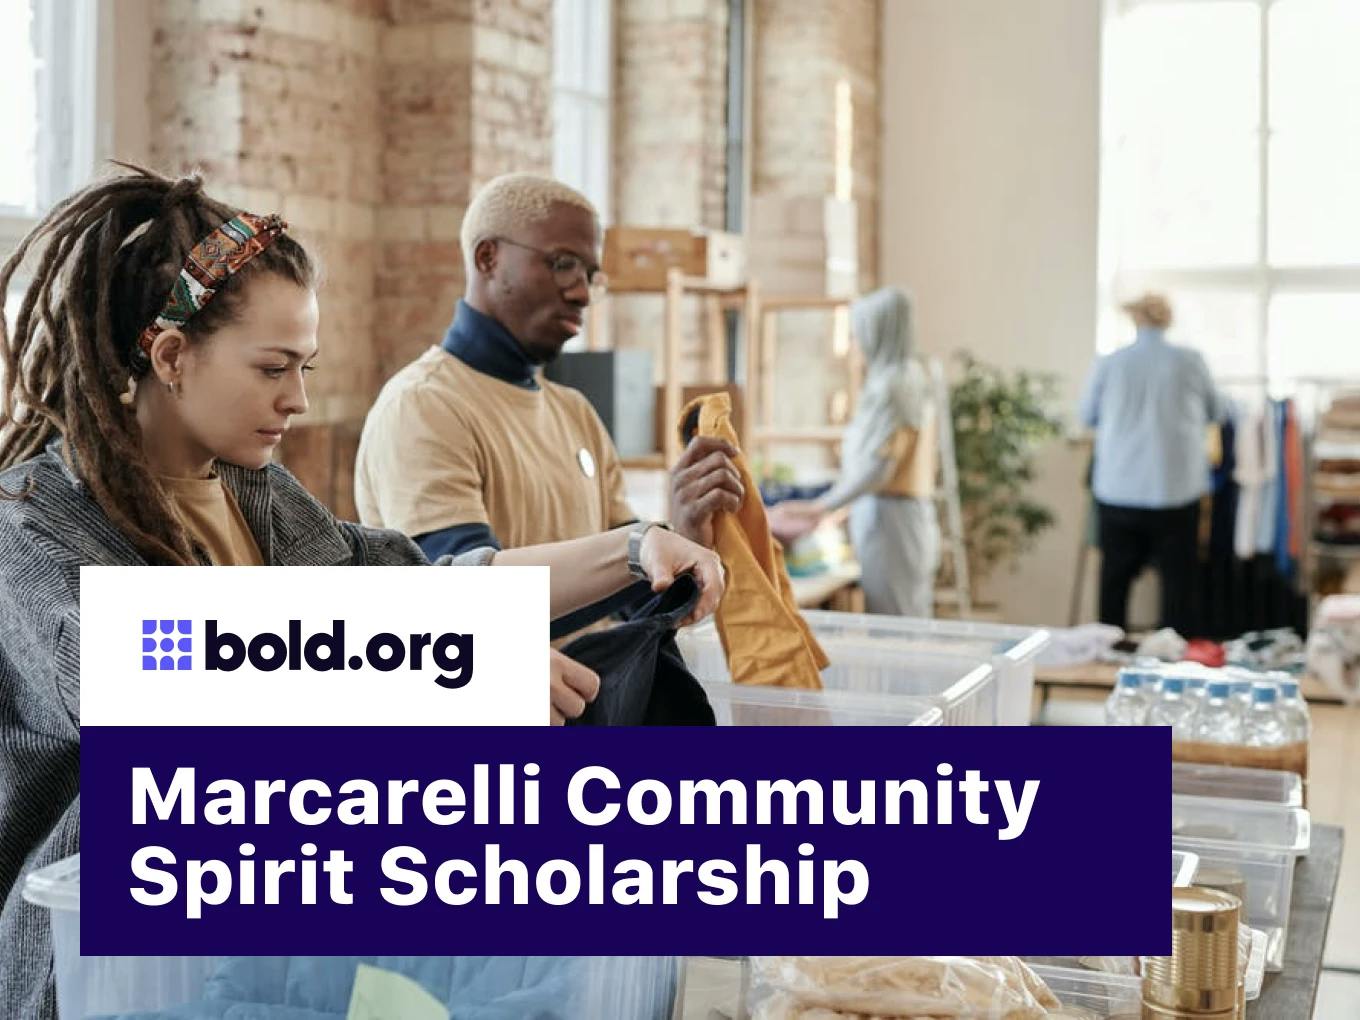 Marcarelli Community Spirit Scholarship